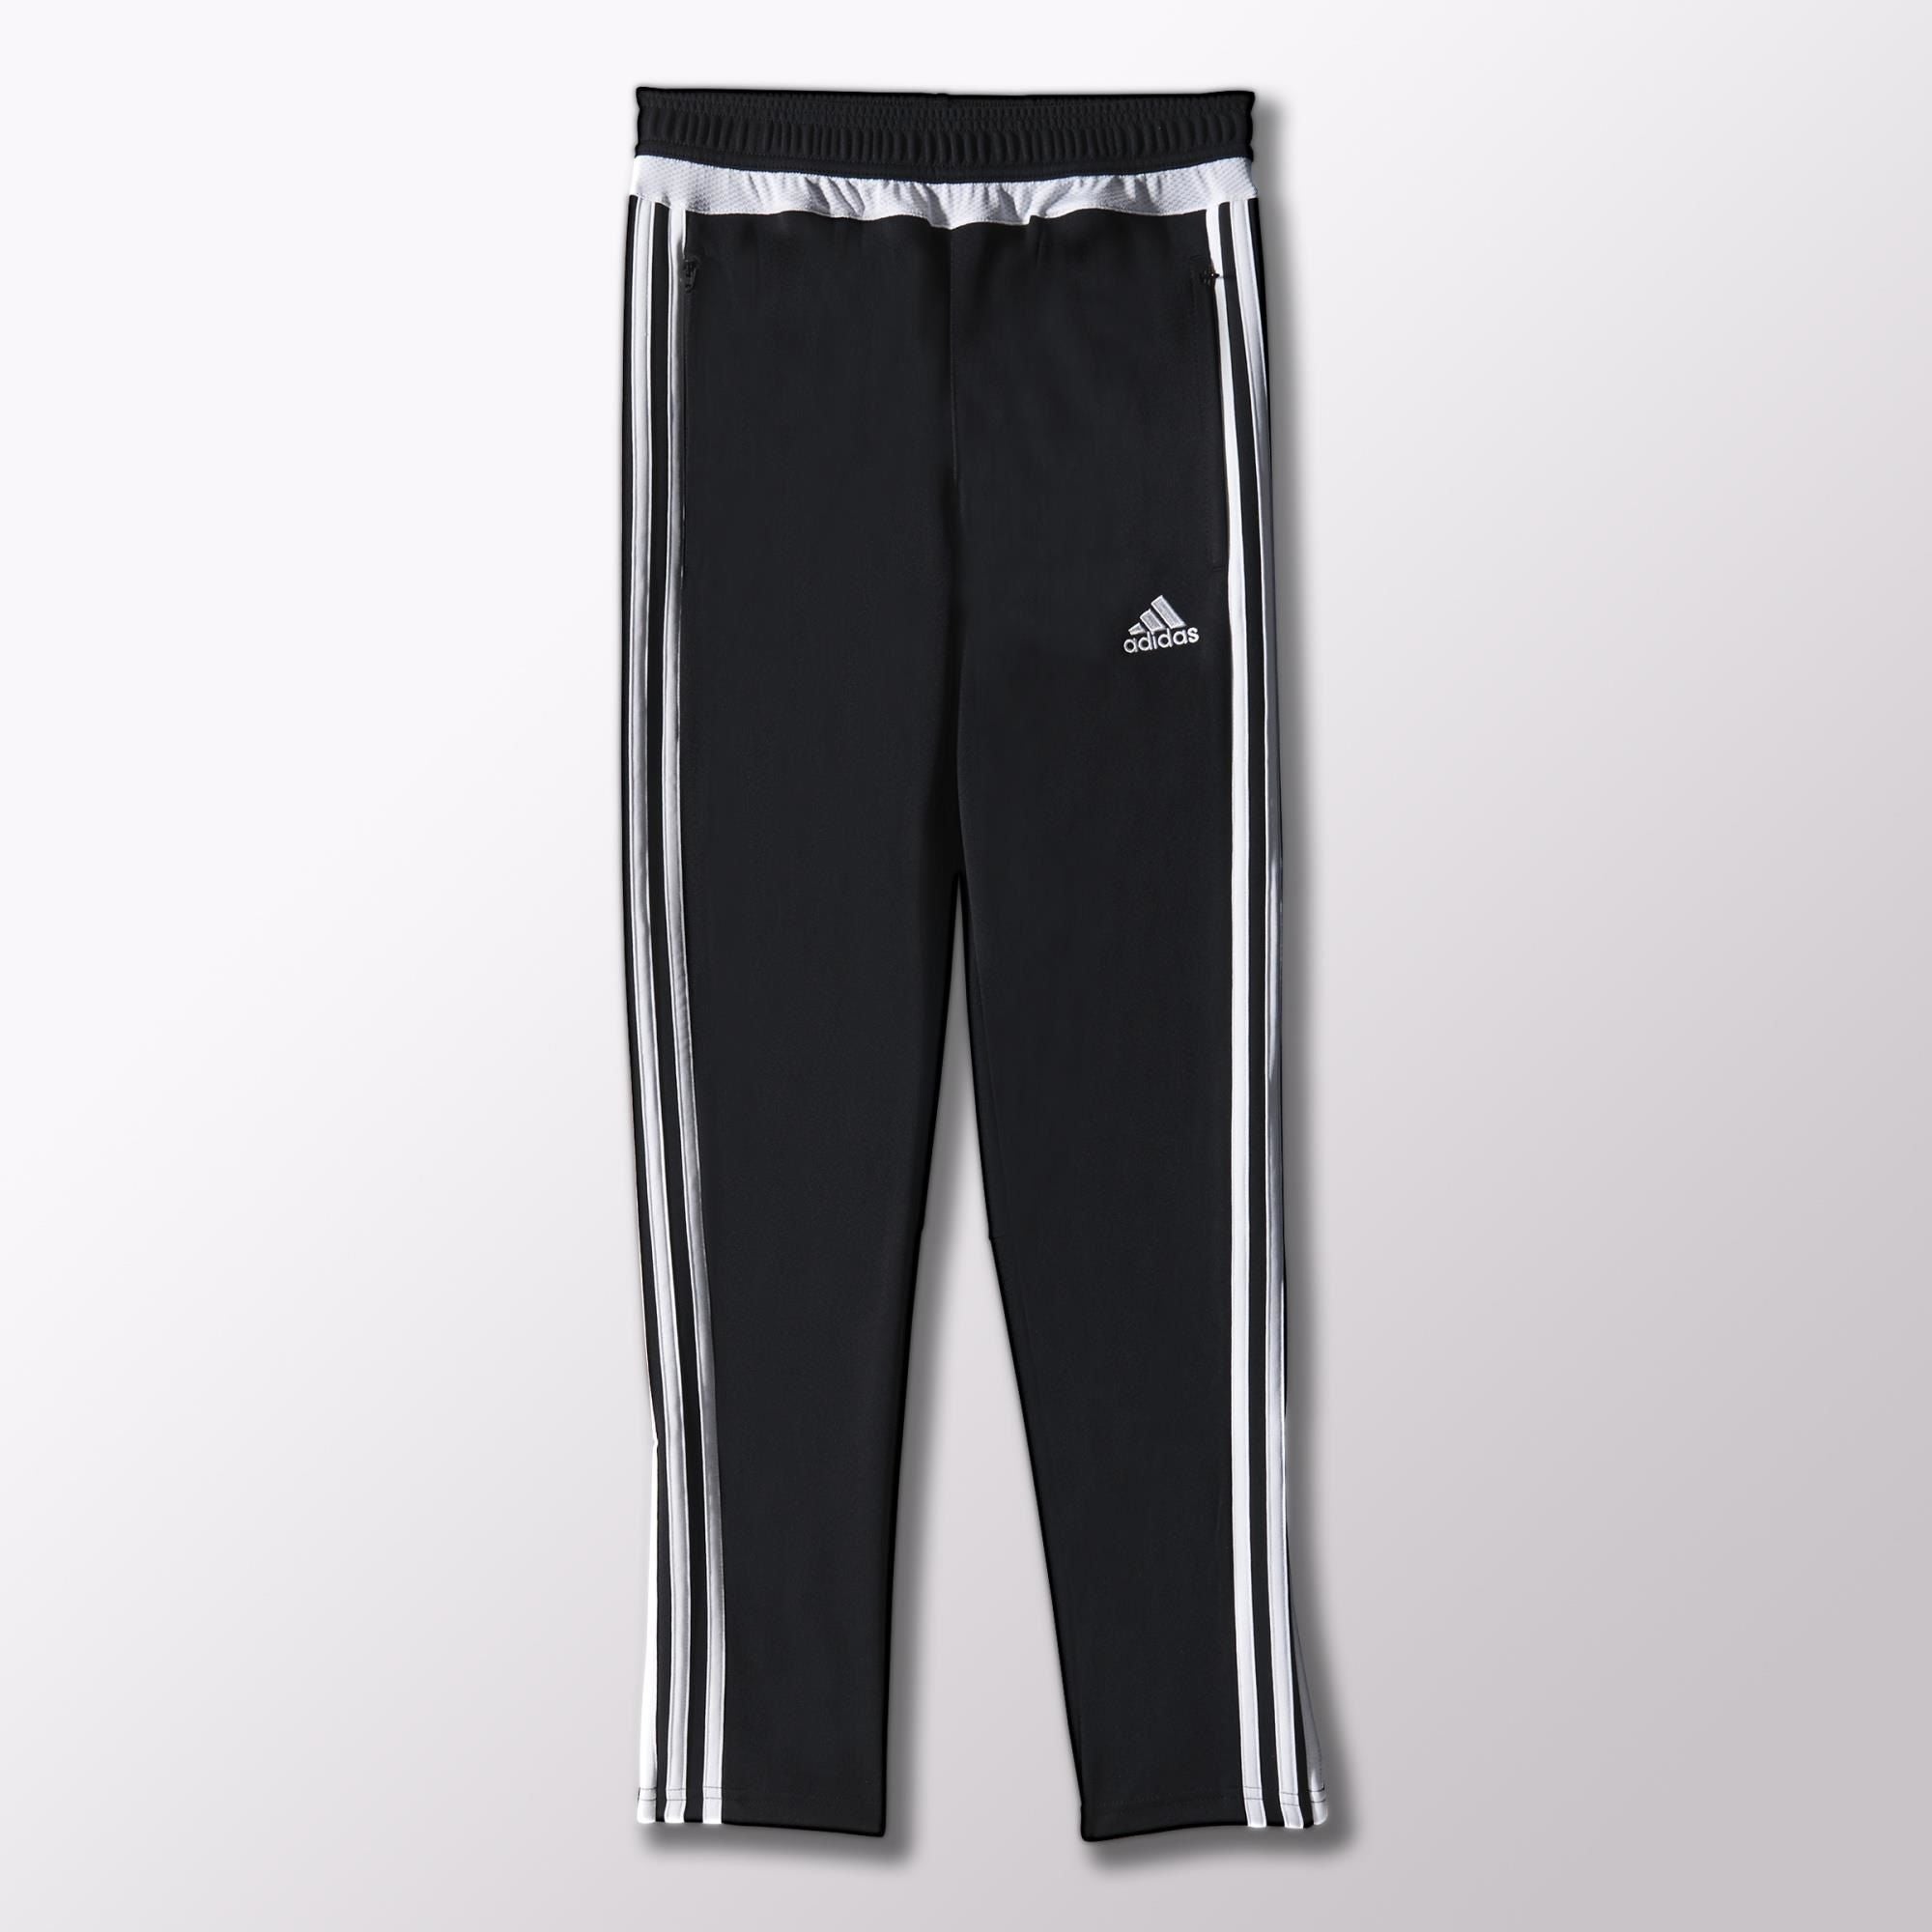 Adidas Tiro 17 soccer pant. Zip pockets& ankles. New. Dark blue. Climacool  | Soccer pants, Clothes design, Pants